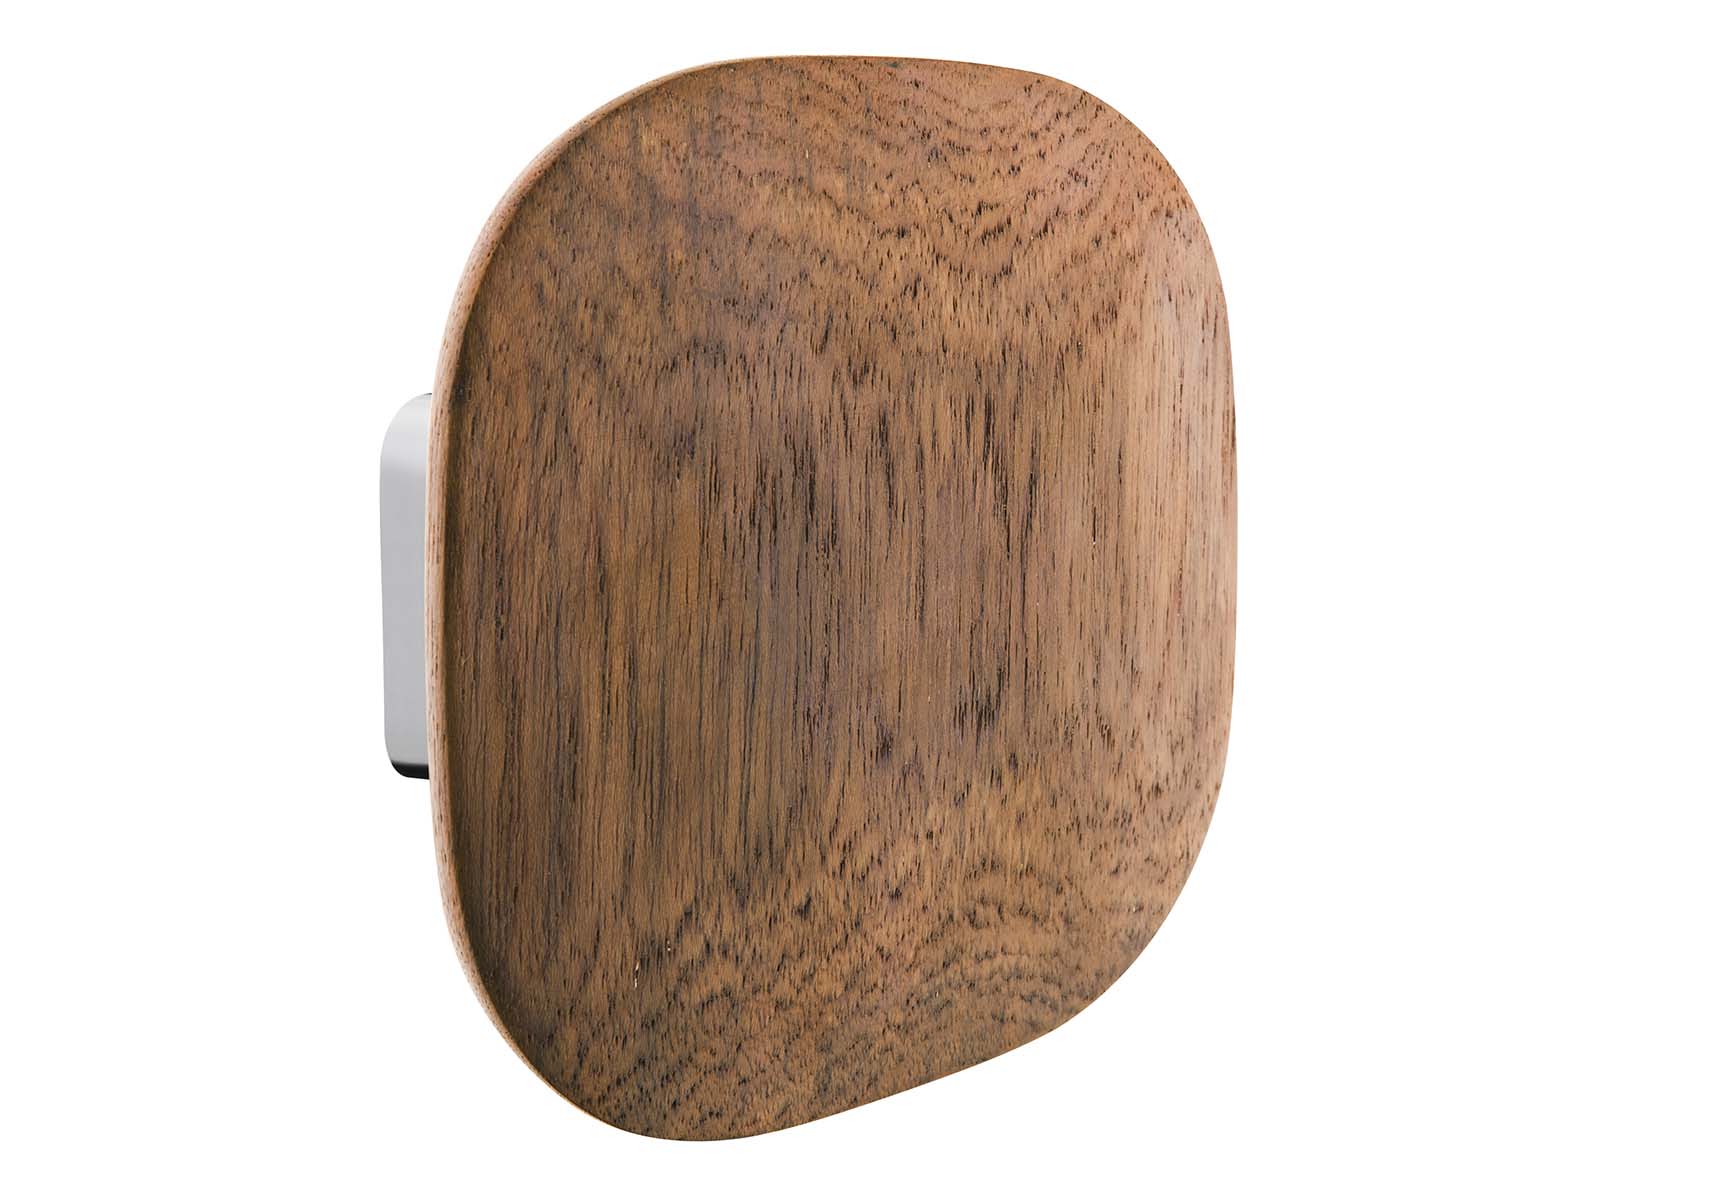 Eternity Large Bathrobe Holder (Square - Wooden) - Shinny Chrome